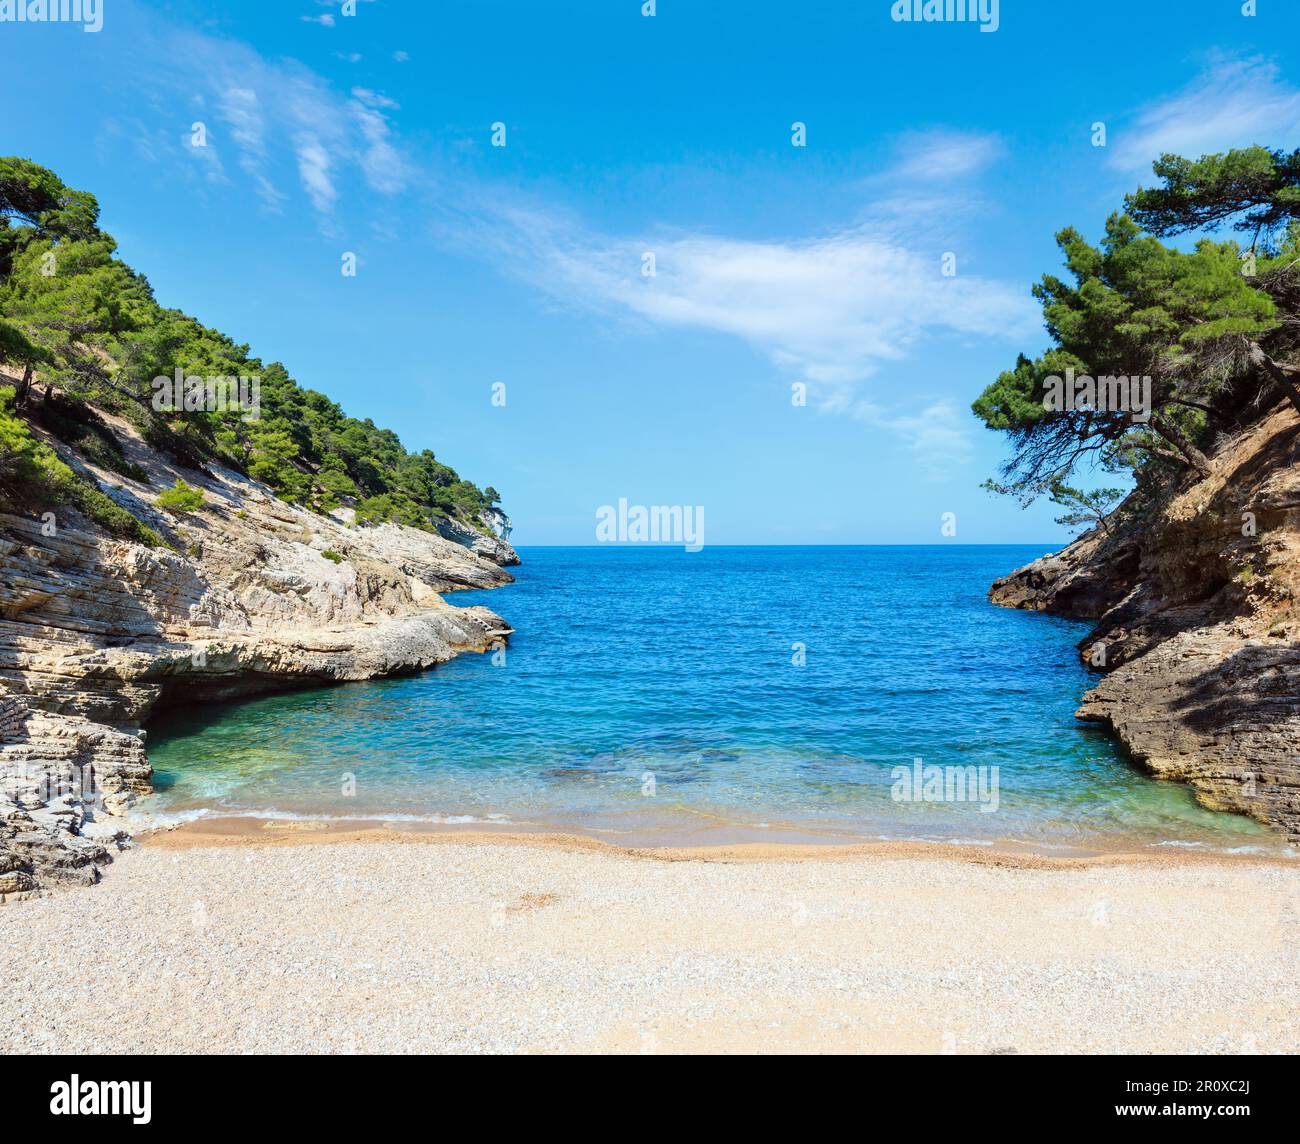 Sommer Baia della Pergola kleinen ruhigen ruhigen Strand, Halbinsel Gargano in Apulien, Italien. Stockfoto